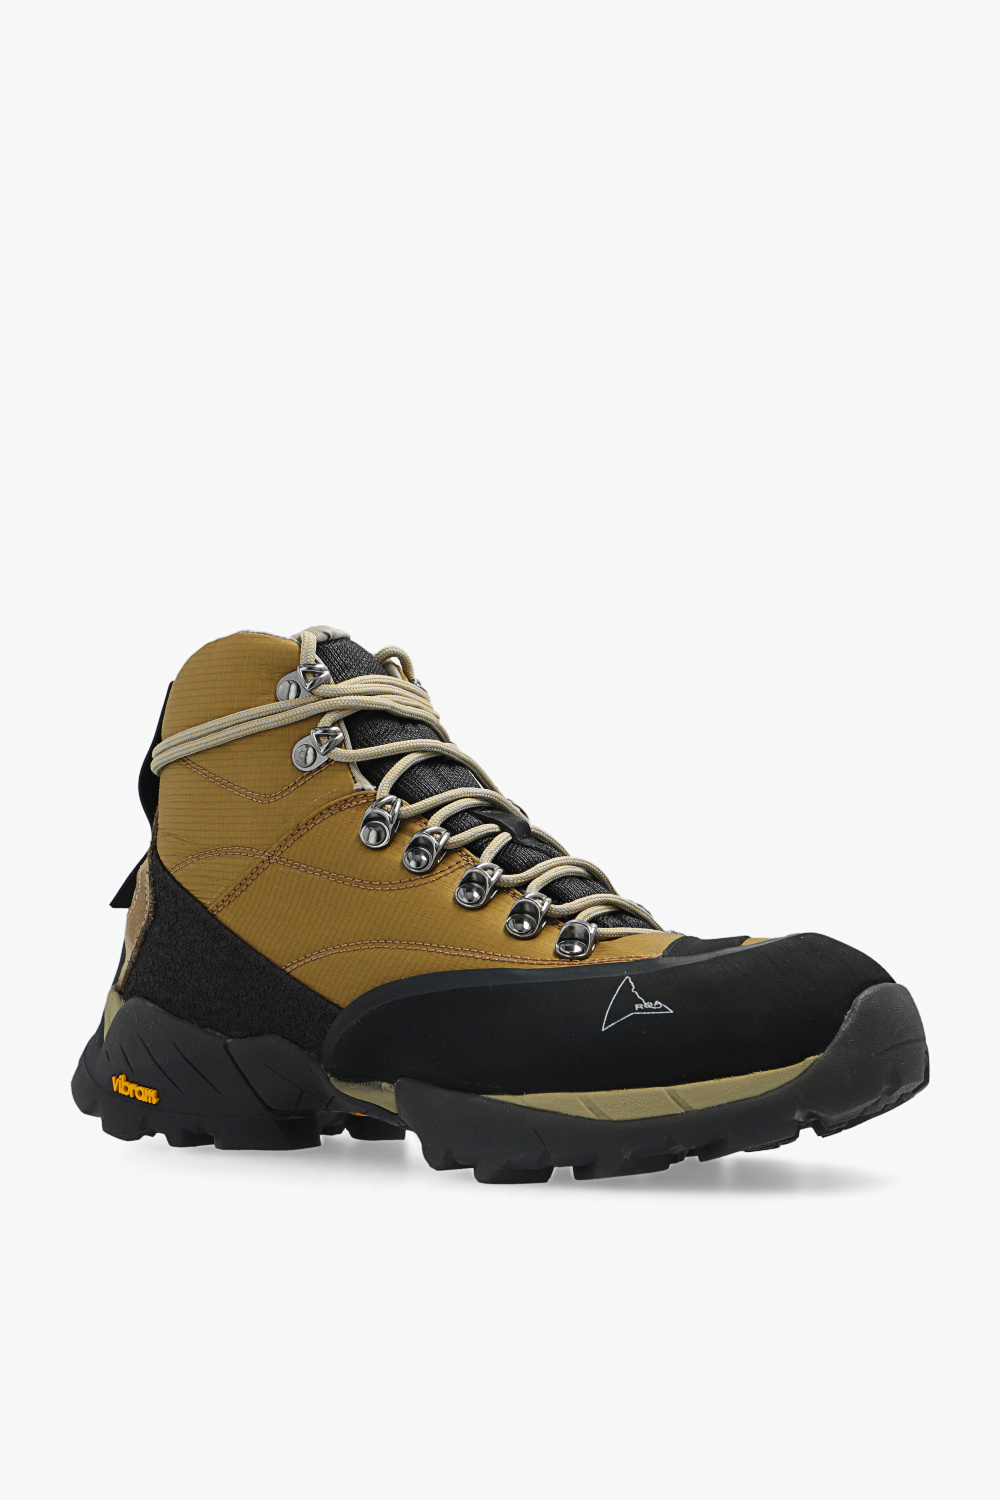 ROA ‘Andreas’ hiking boots